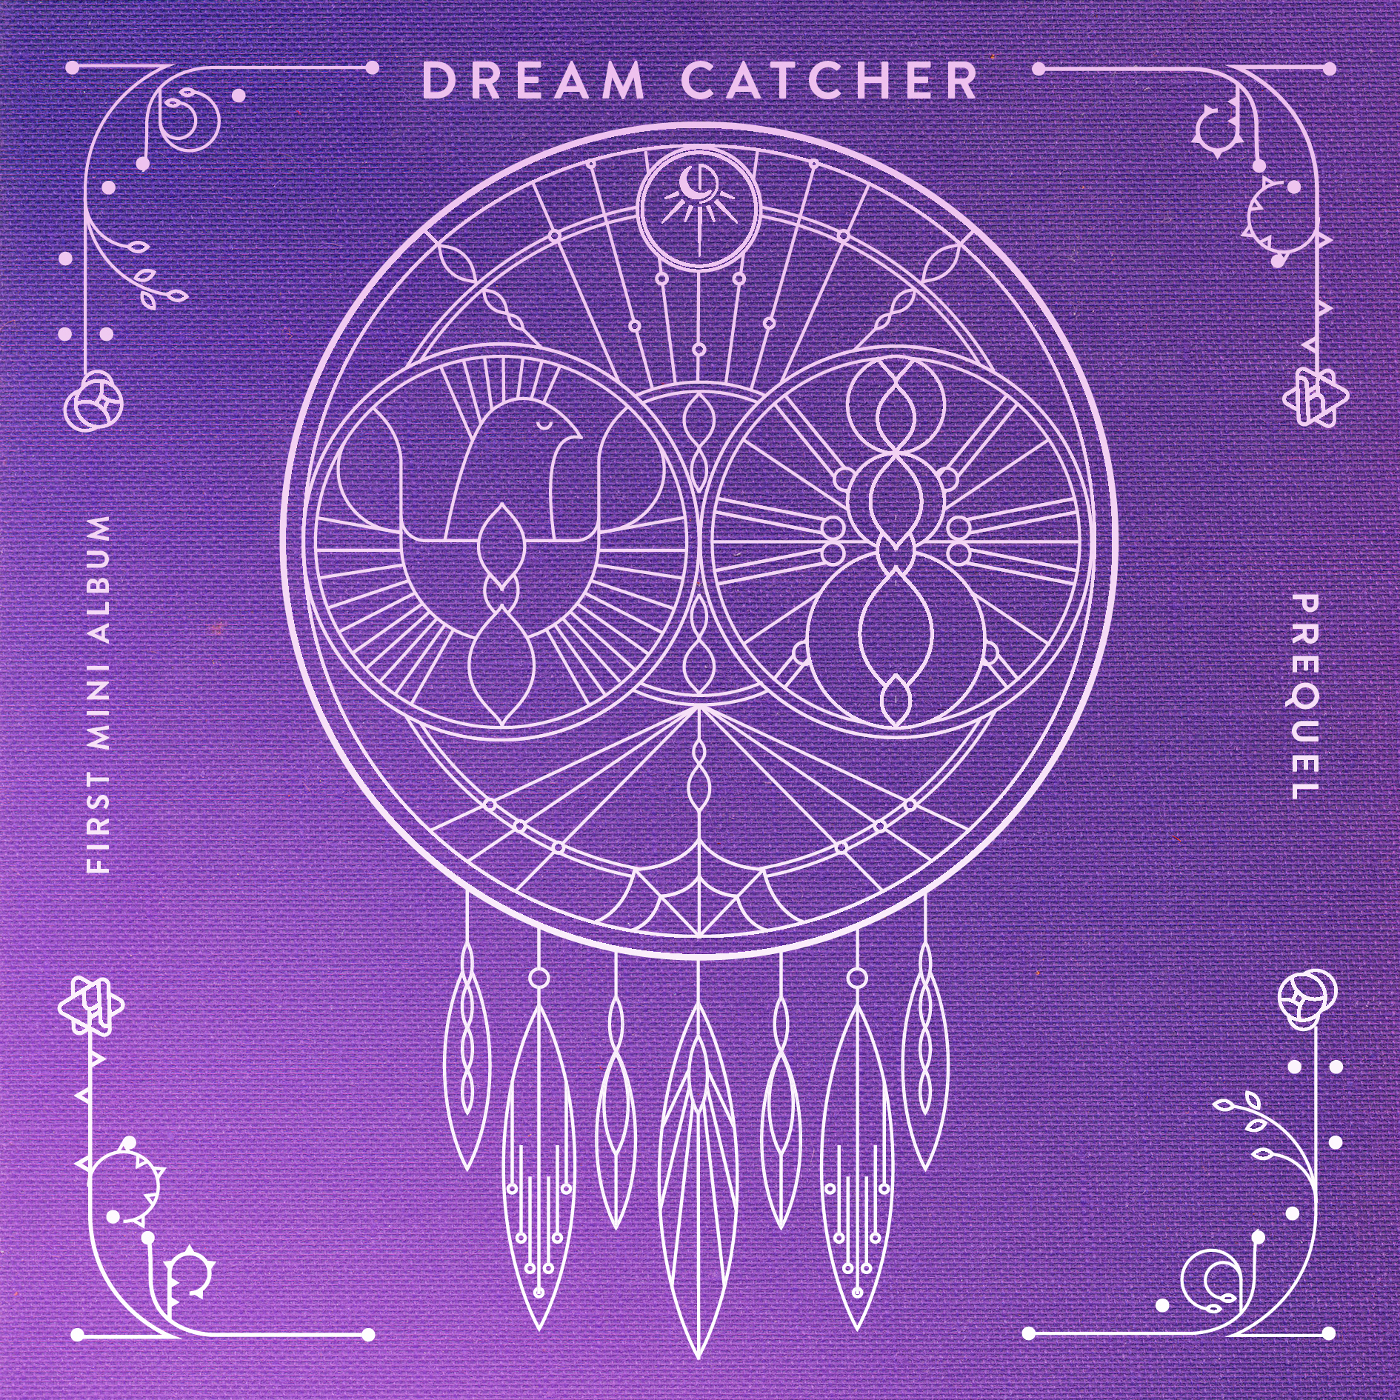 Prequel (Dreamcatcher) | Kpop Wiki | Fandom